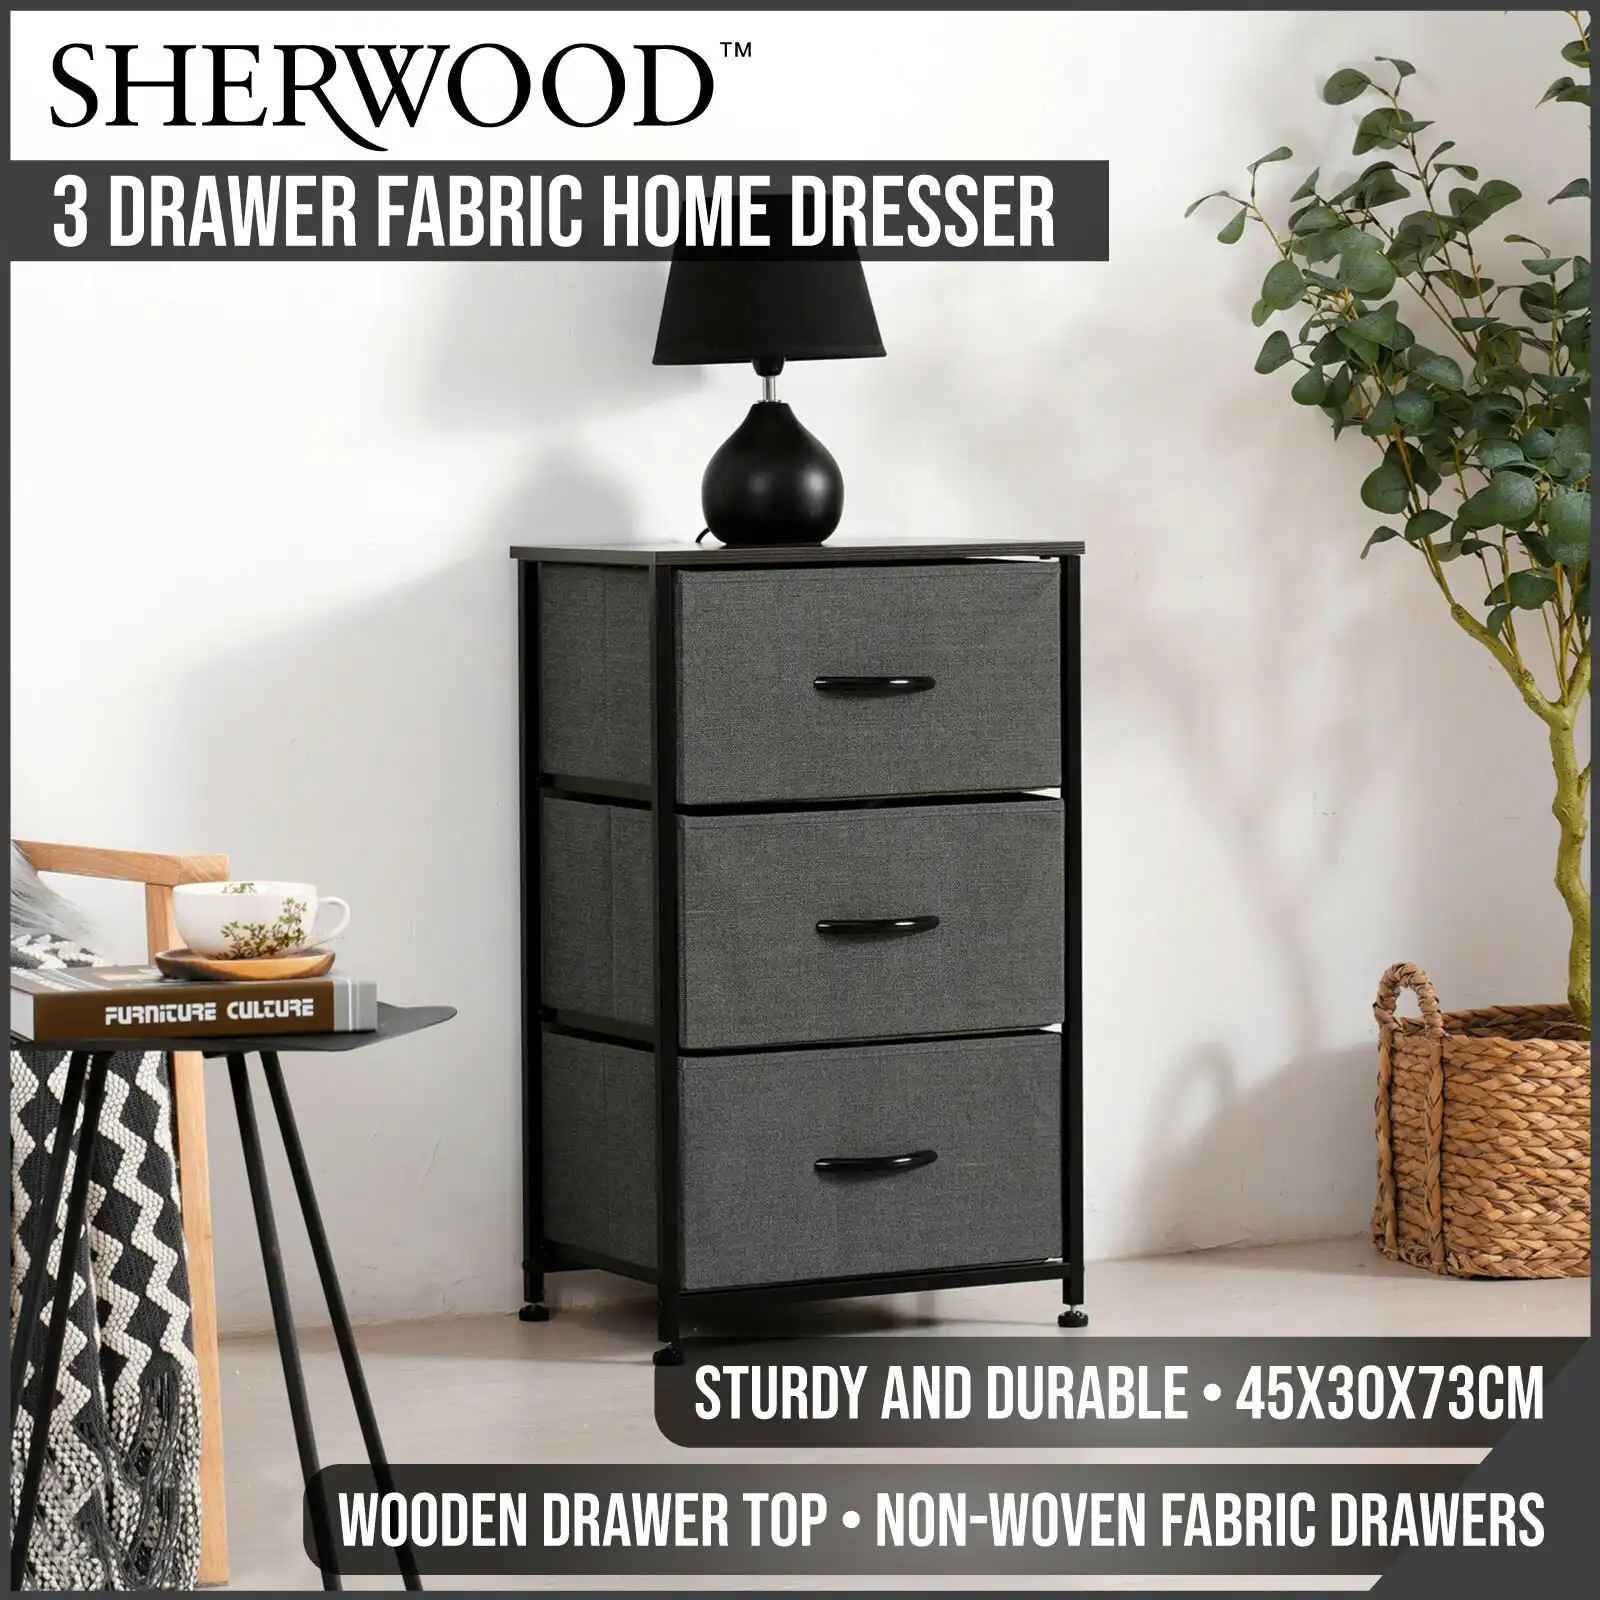 Sherwood Luna 3 Drawer Fabric Home Dresser Charcoal?